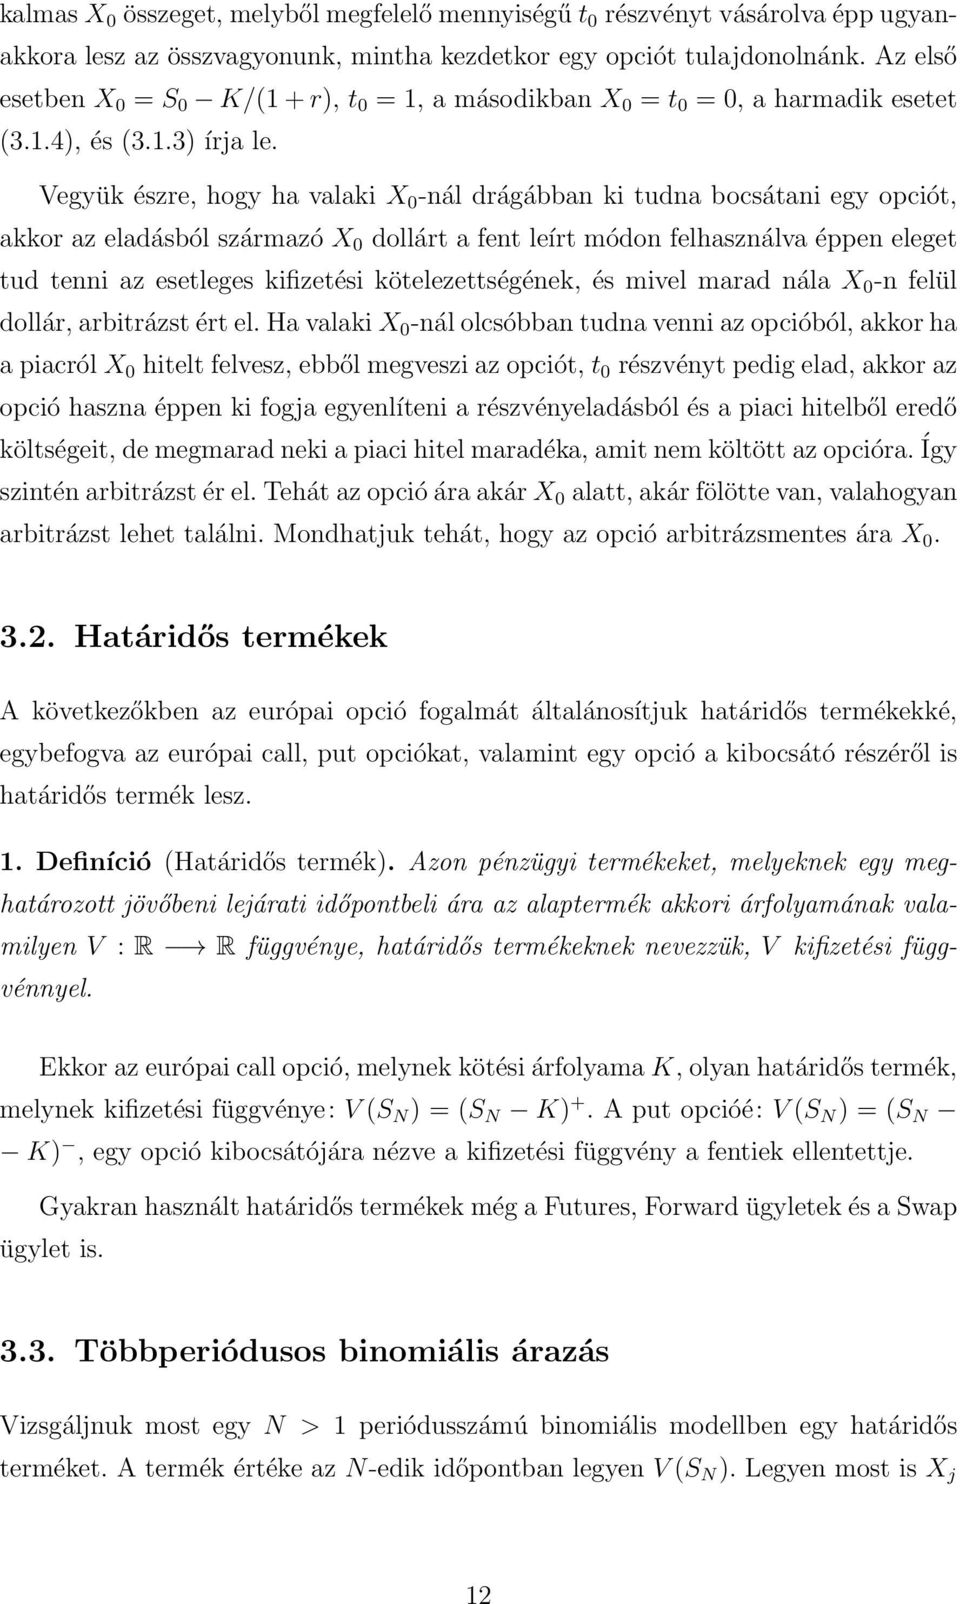 Black-Scholes - Hungarian-English Dictionary - Glosbe